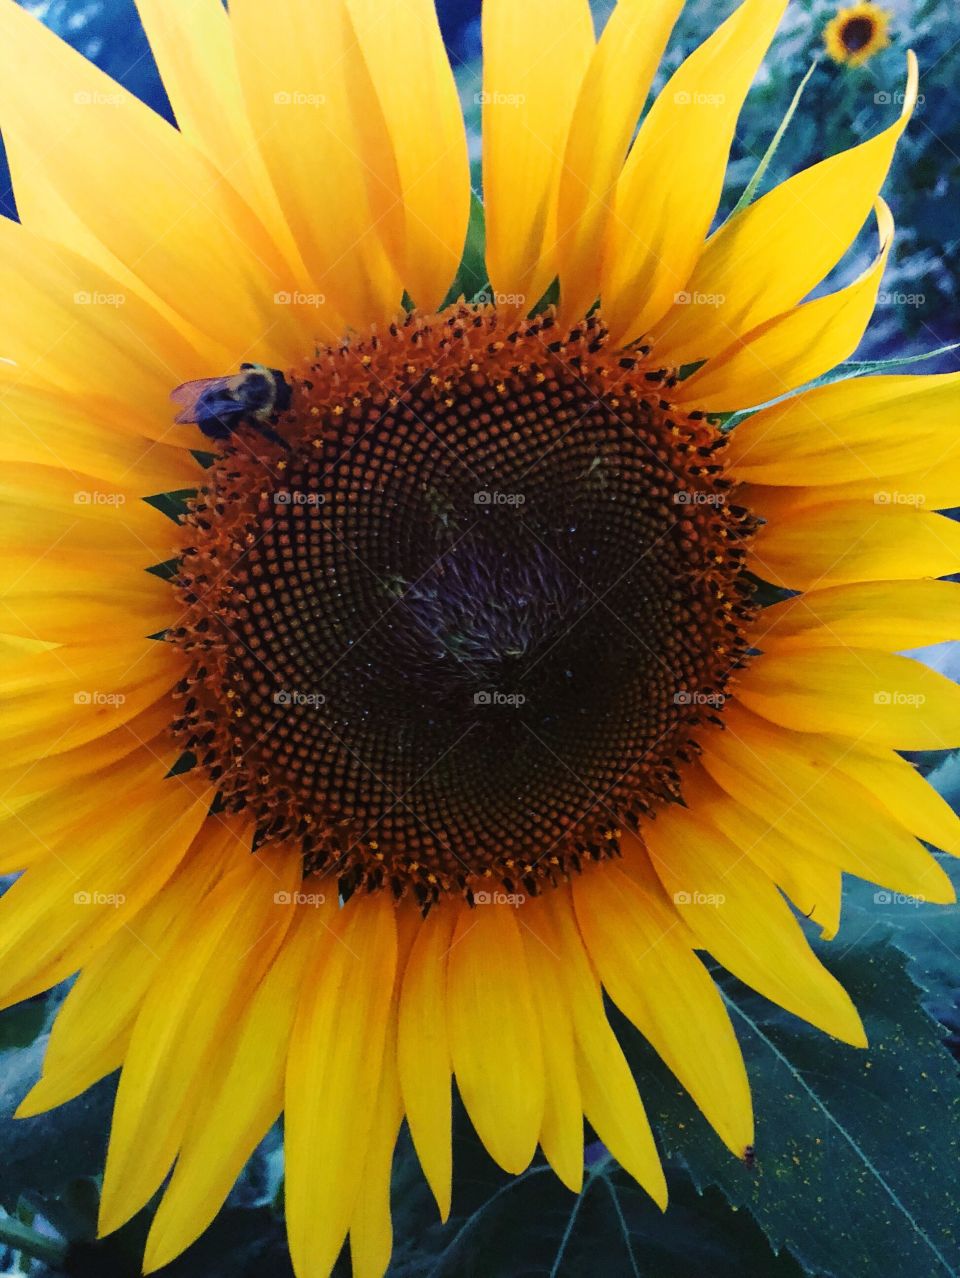 Bumblebee on a sunflower 